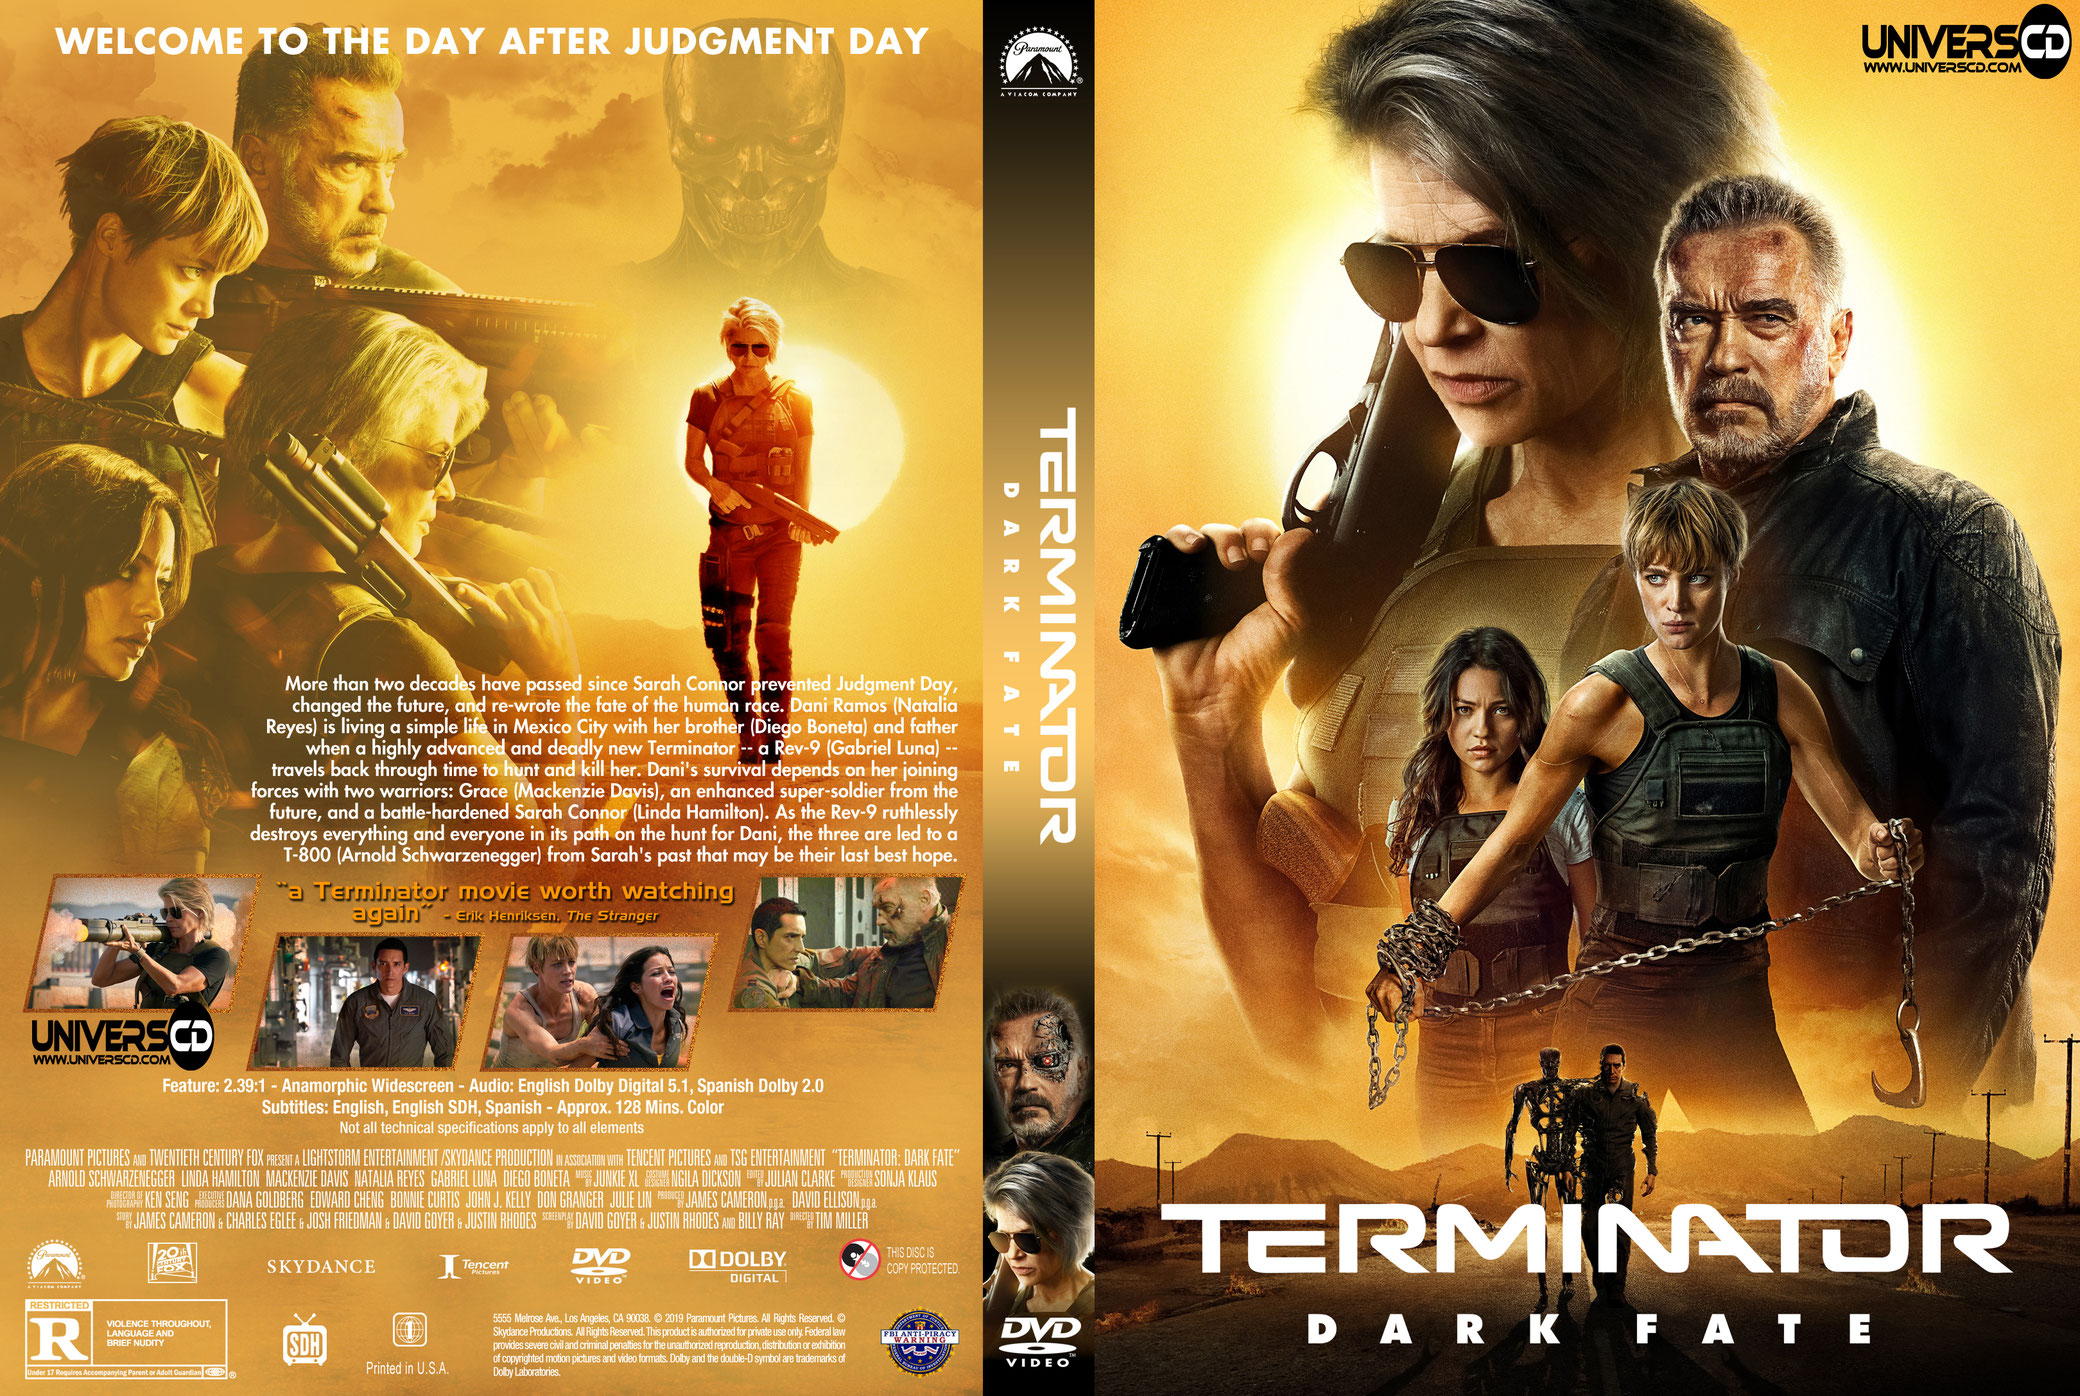 Terminator dark fate обзор. Терминатор темные судьбы Blu ray обложка. Terminator: Dark Fate DVD Cover. Терминатор тёмные судьбы. Terminator Dark Fate Blu ray Cover.